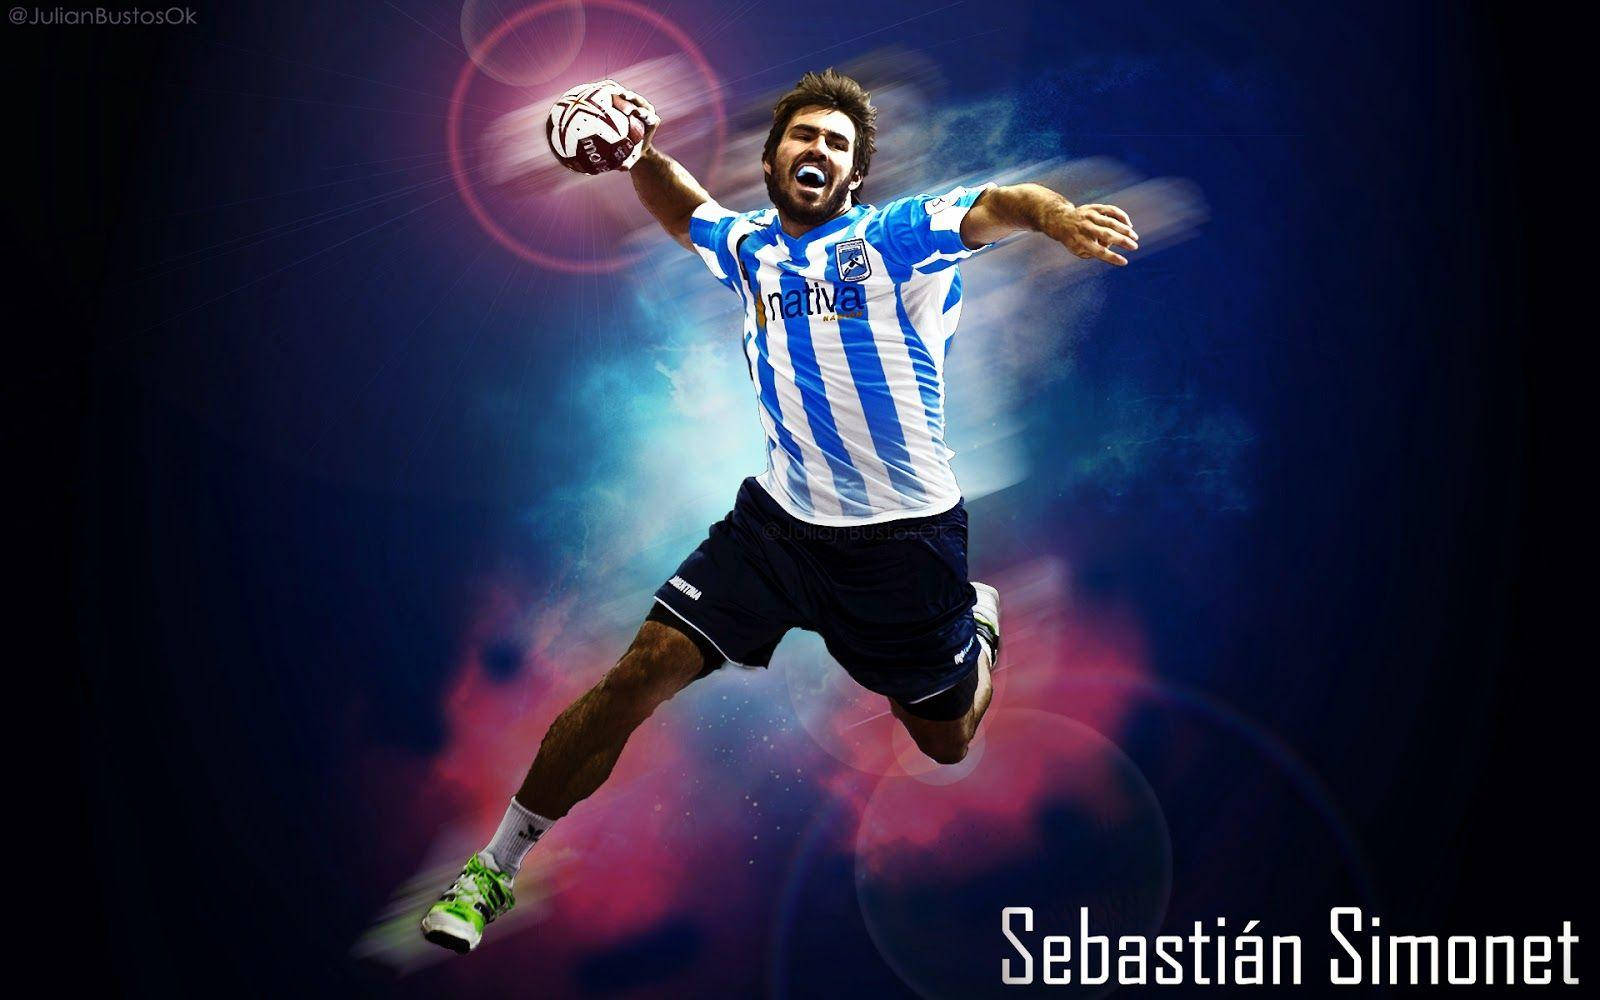 Handball Player Sebastián Simonet